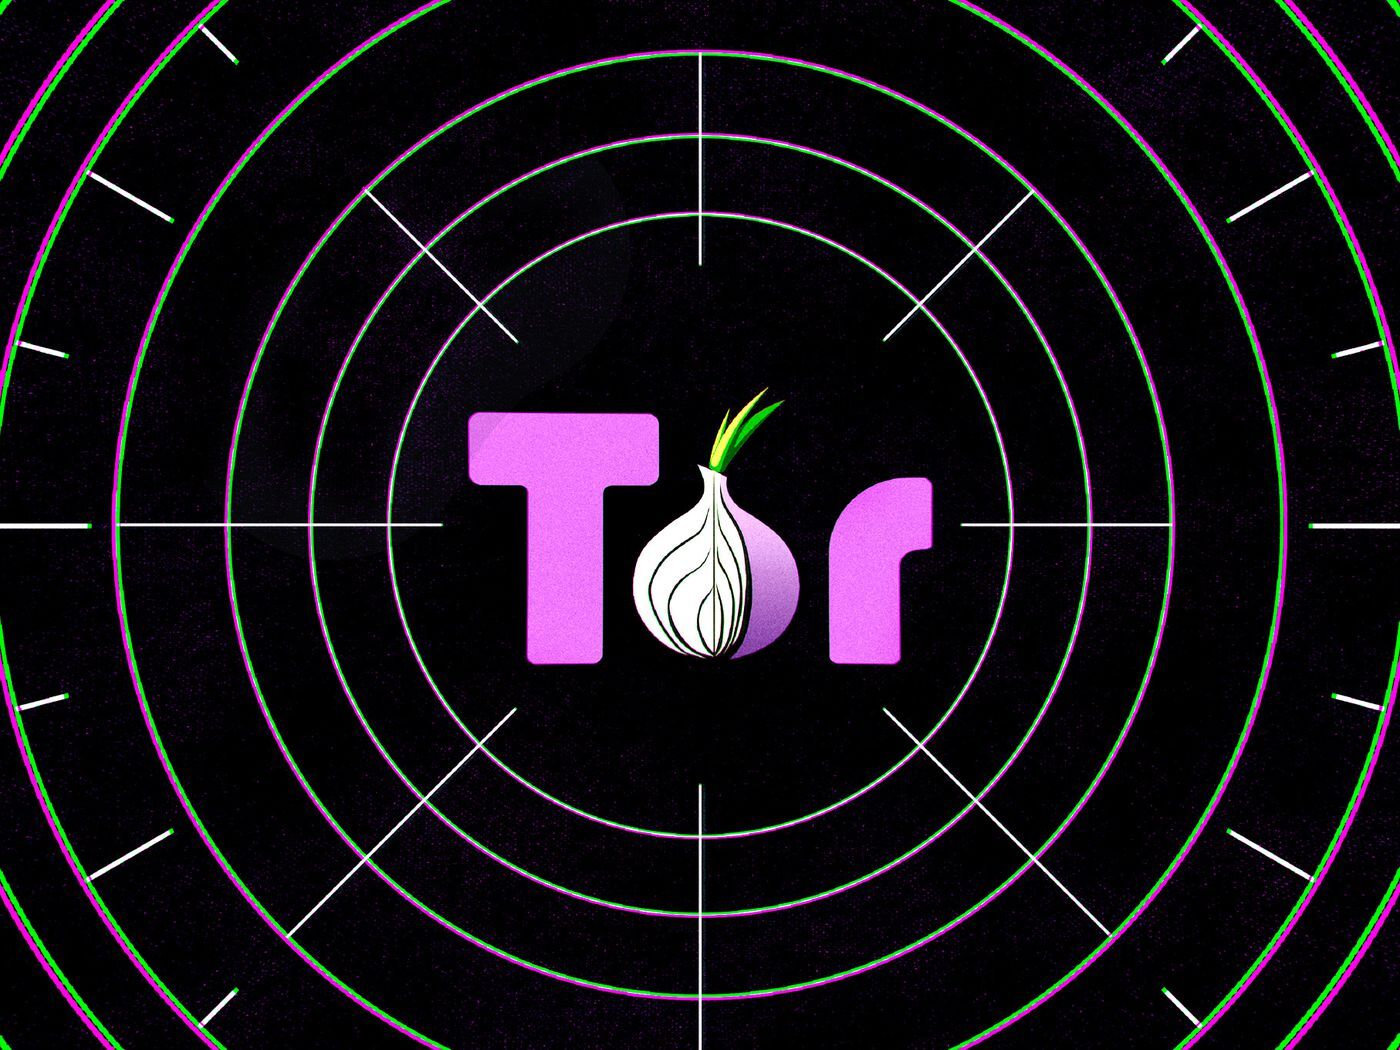    Tor   